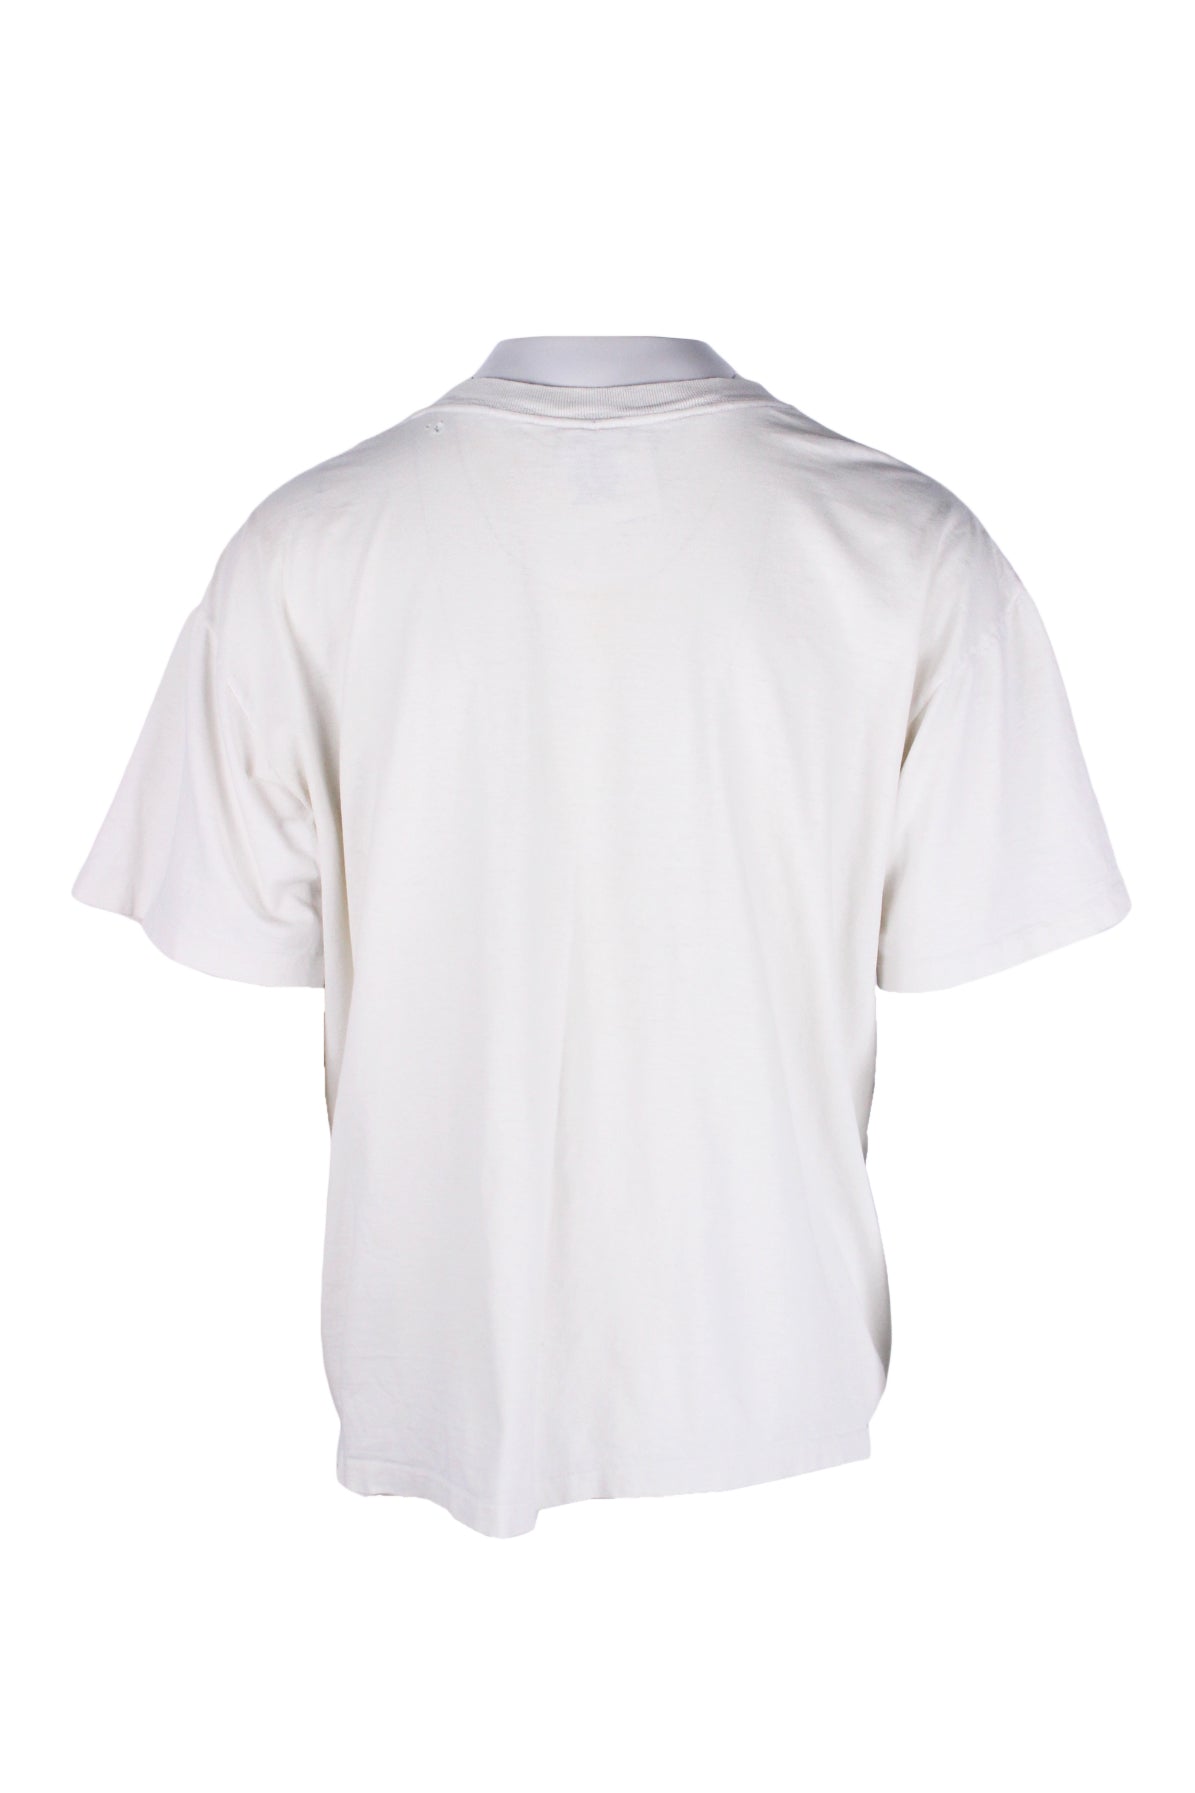 back angle of short sleeve cotton t-shirt. 